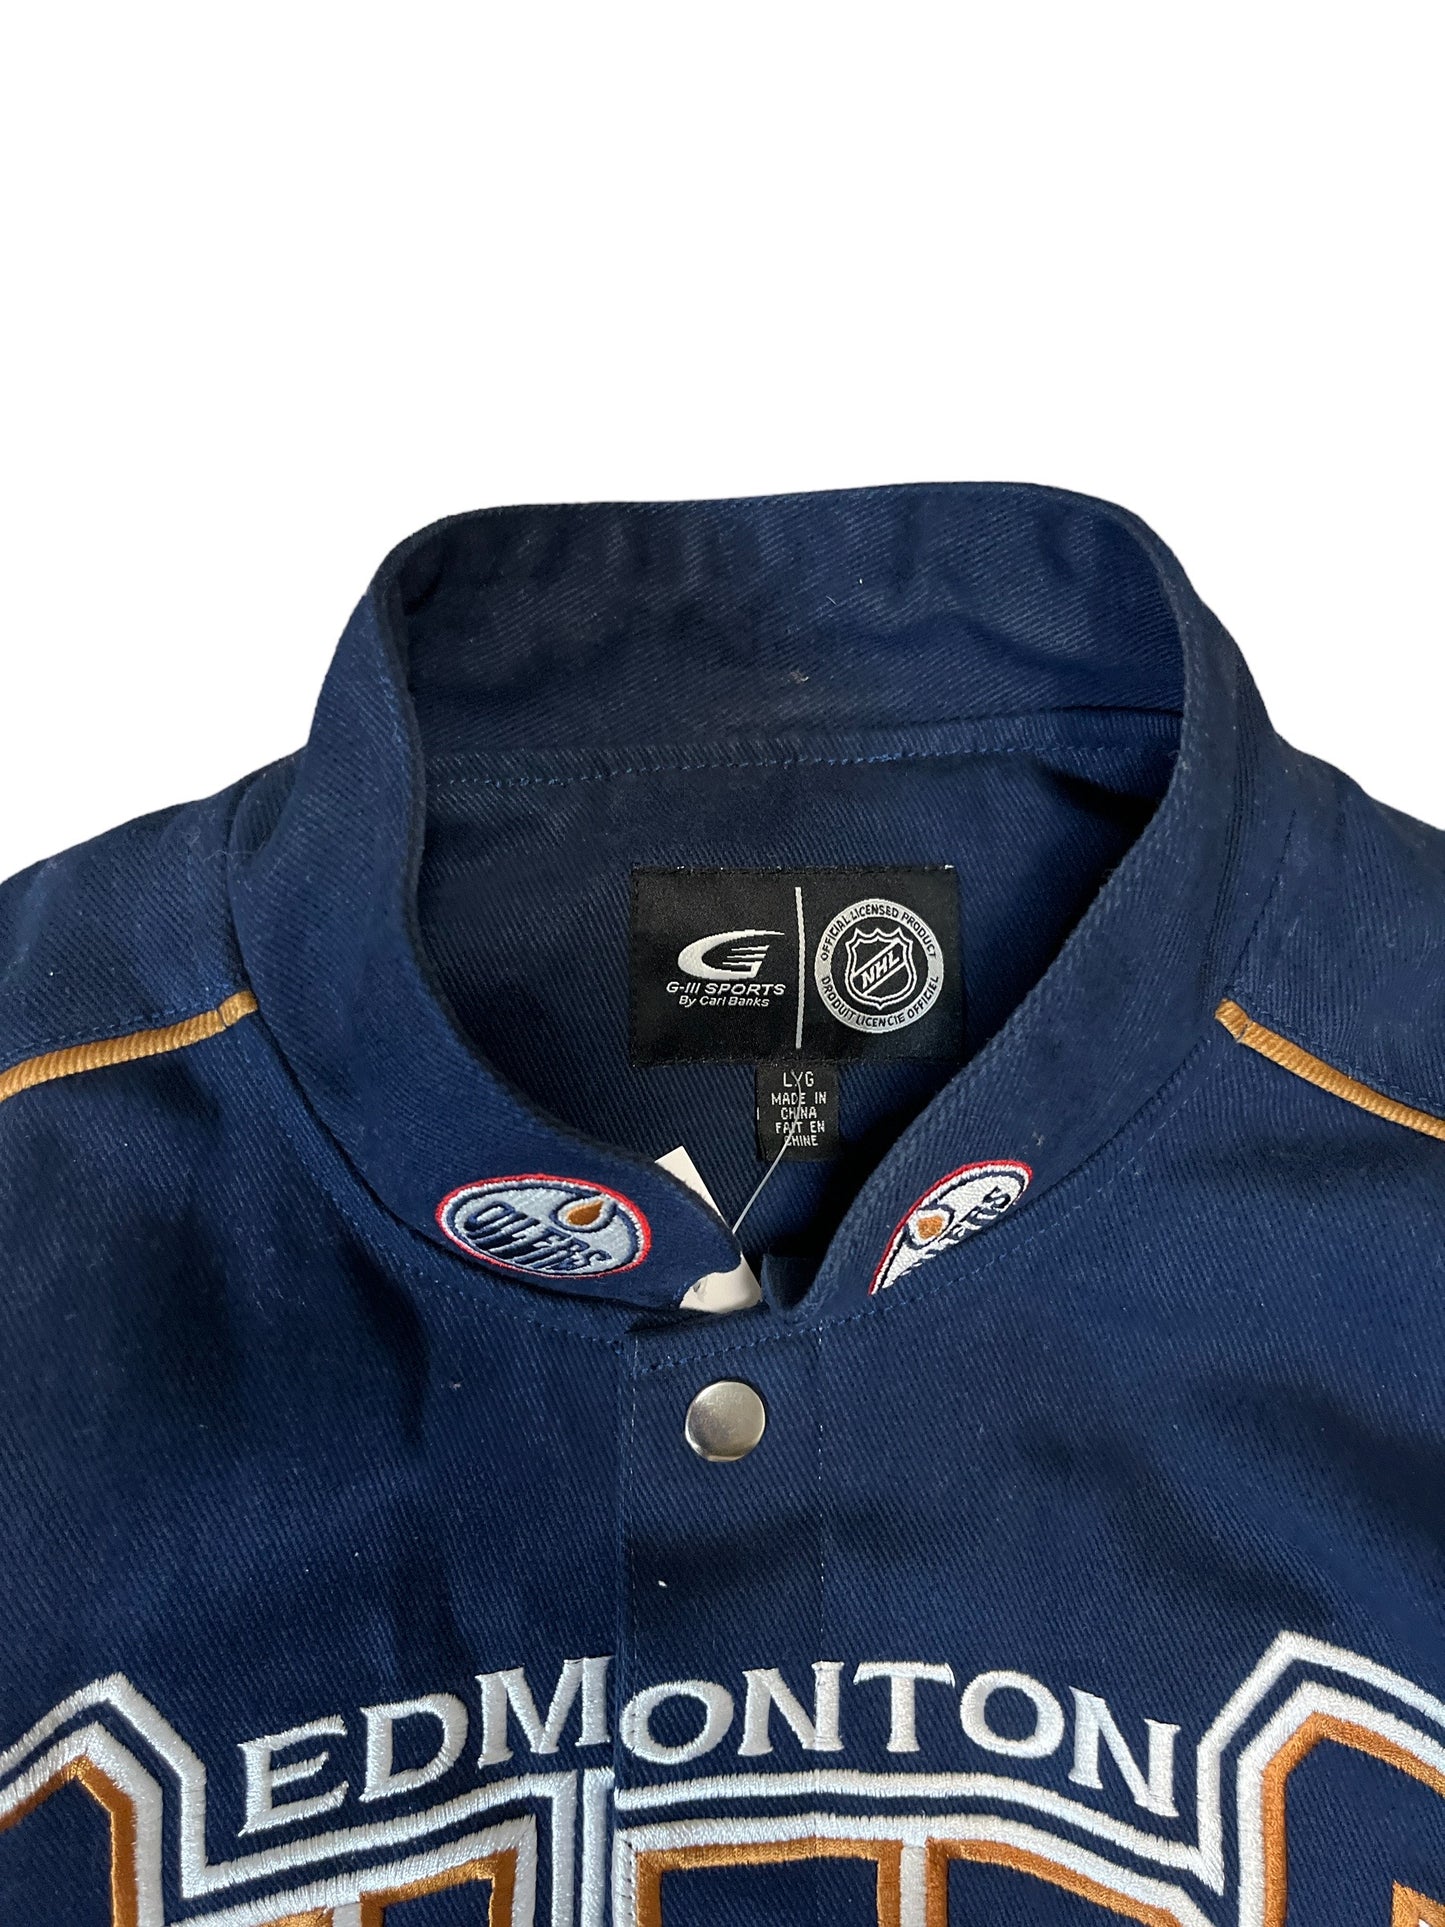 Super Rare NHL G-III Sports Edmonton Oilers Racing Jacket